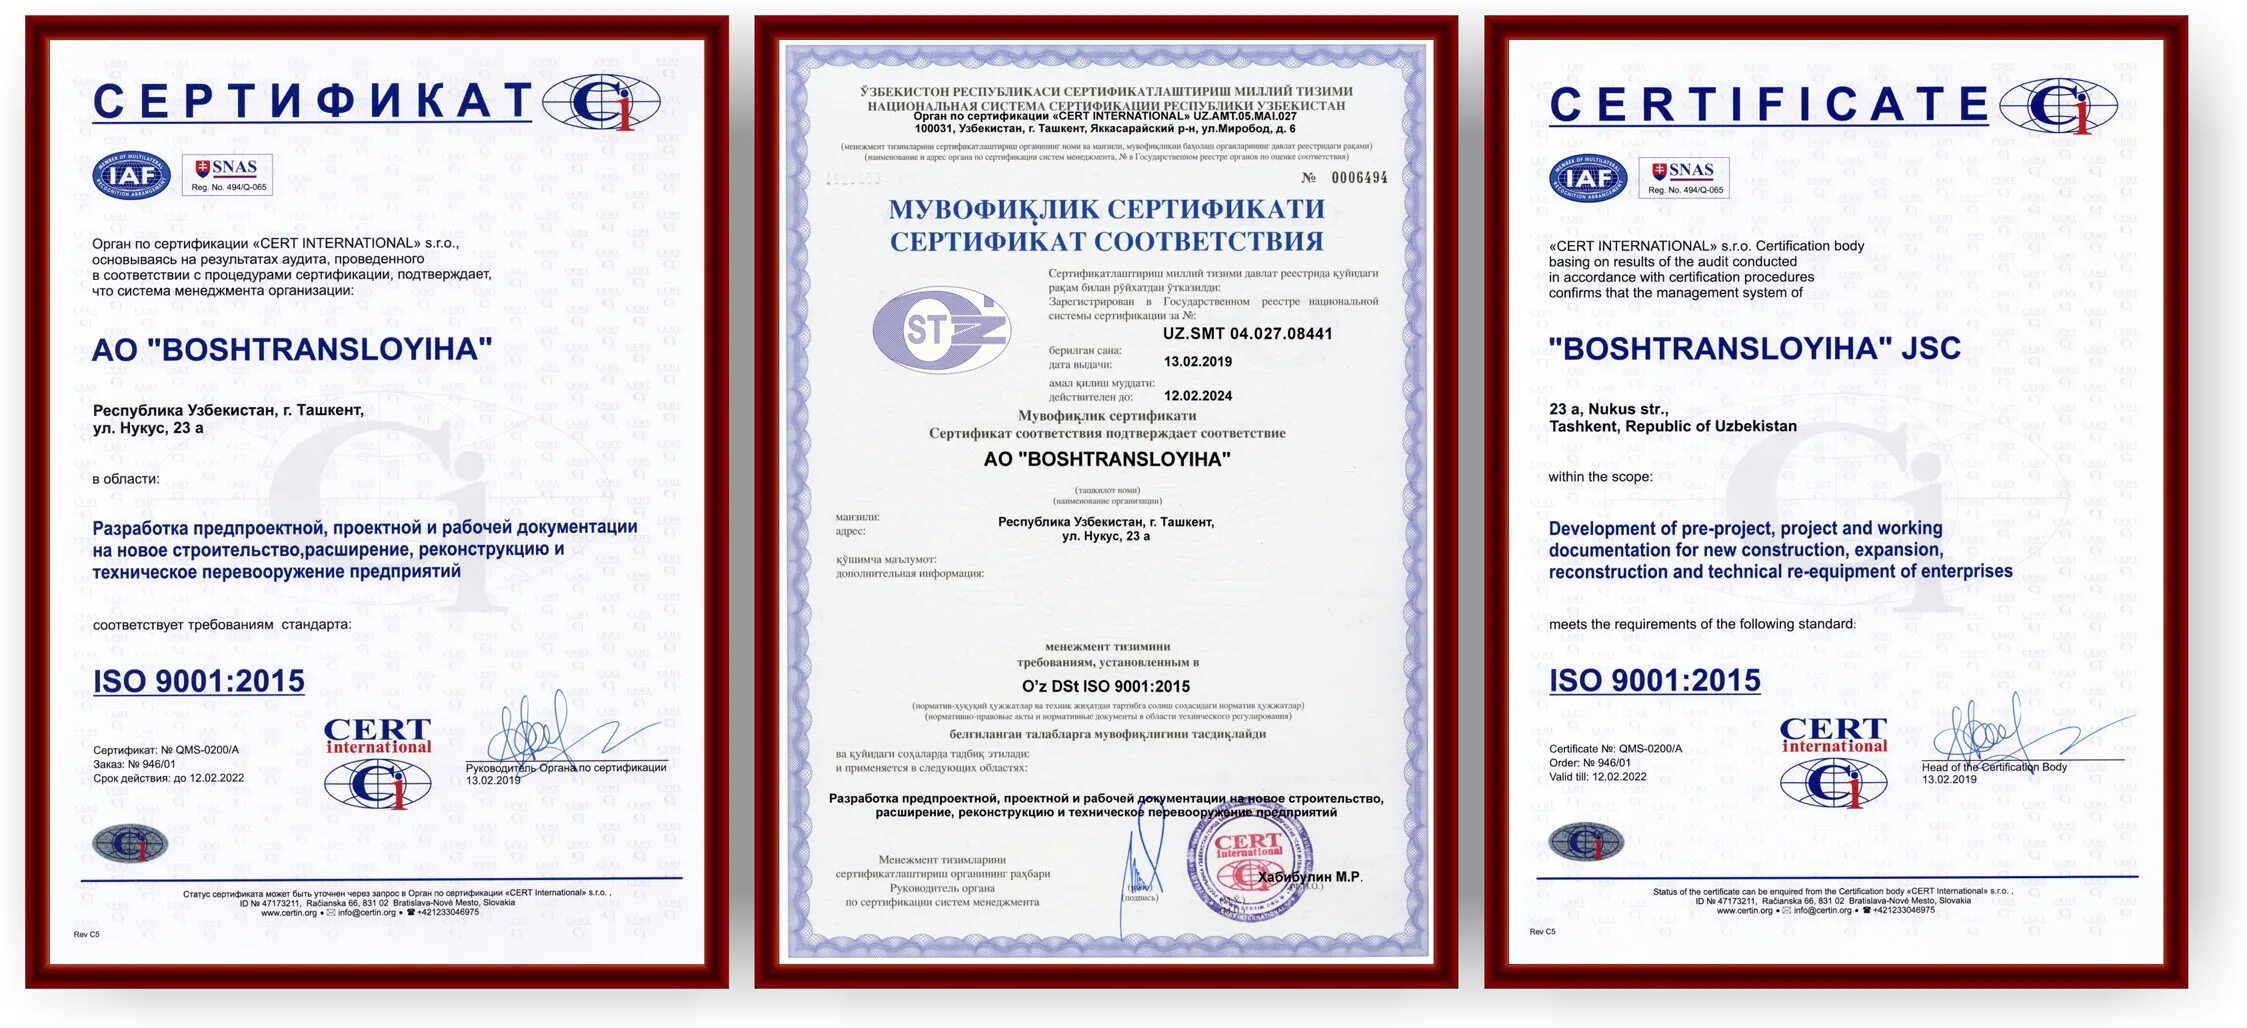 Сертификат ГОСТ Р ИСО 9001. TDM Electric ISO 9001. Сертификат СМК ИСО 9001. Сертификат качества ISO 9001 2000. Уик 9001 москва